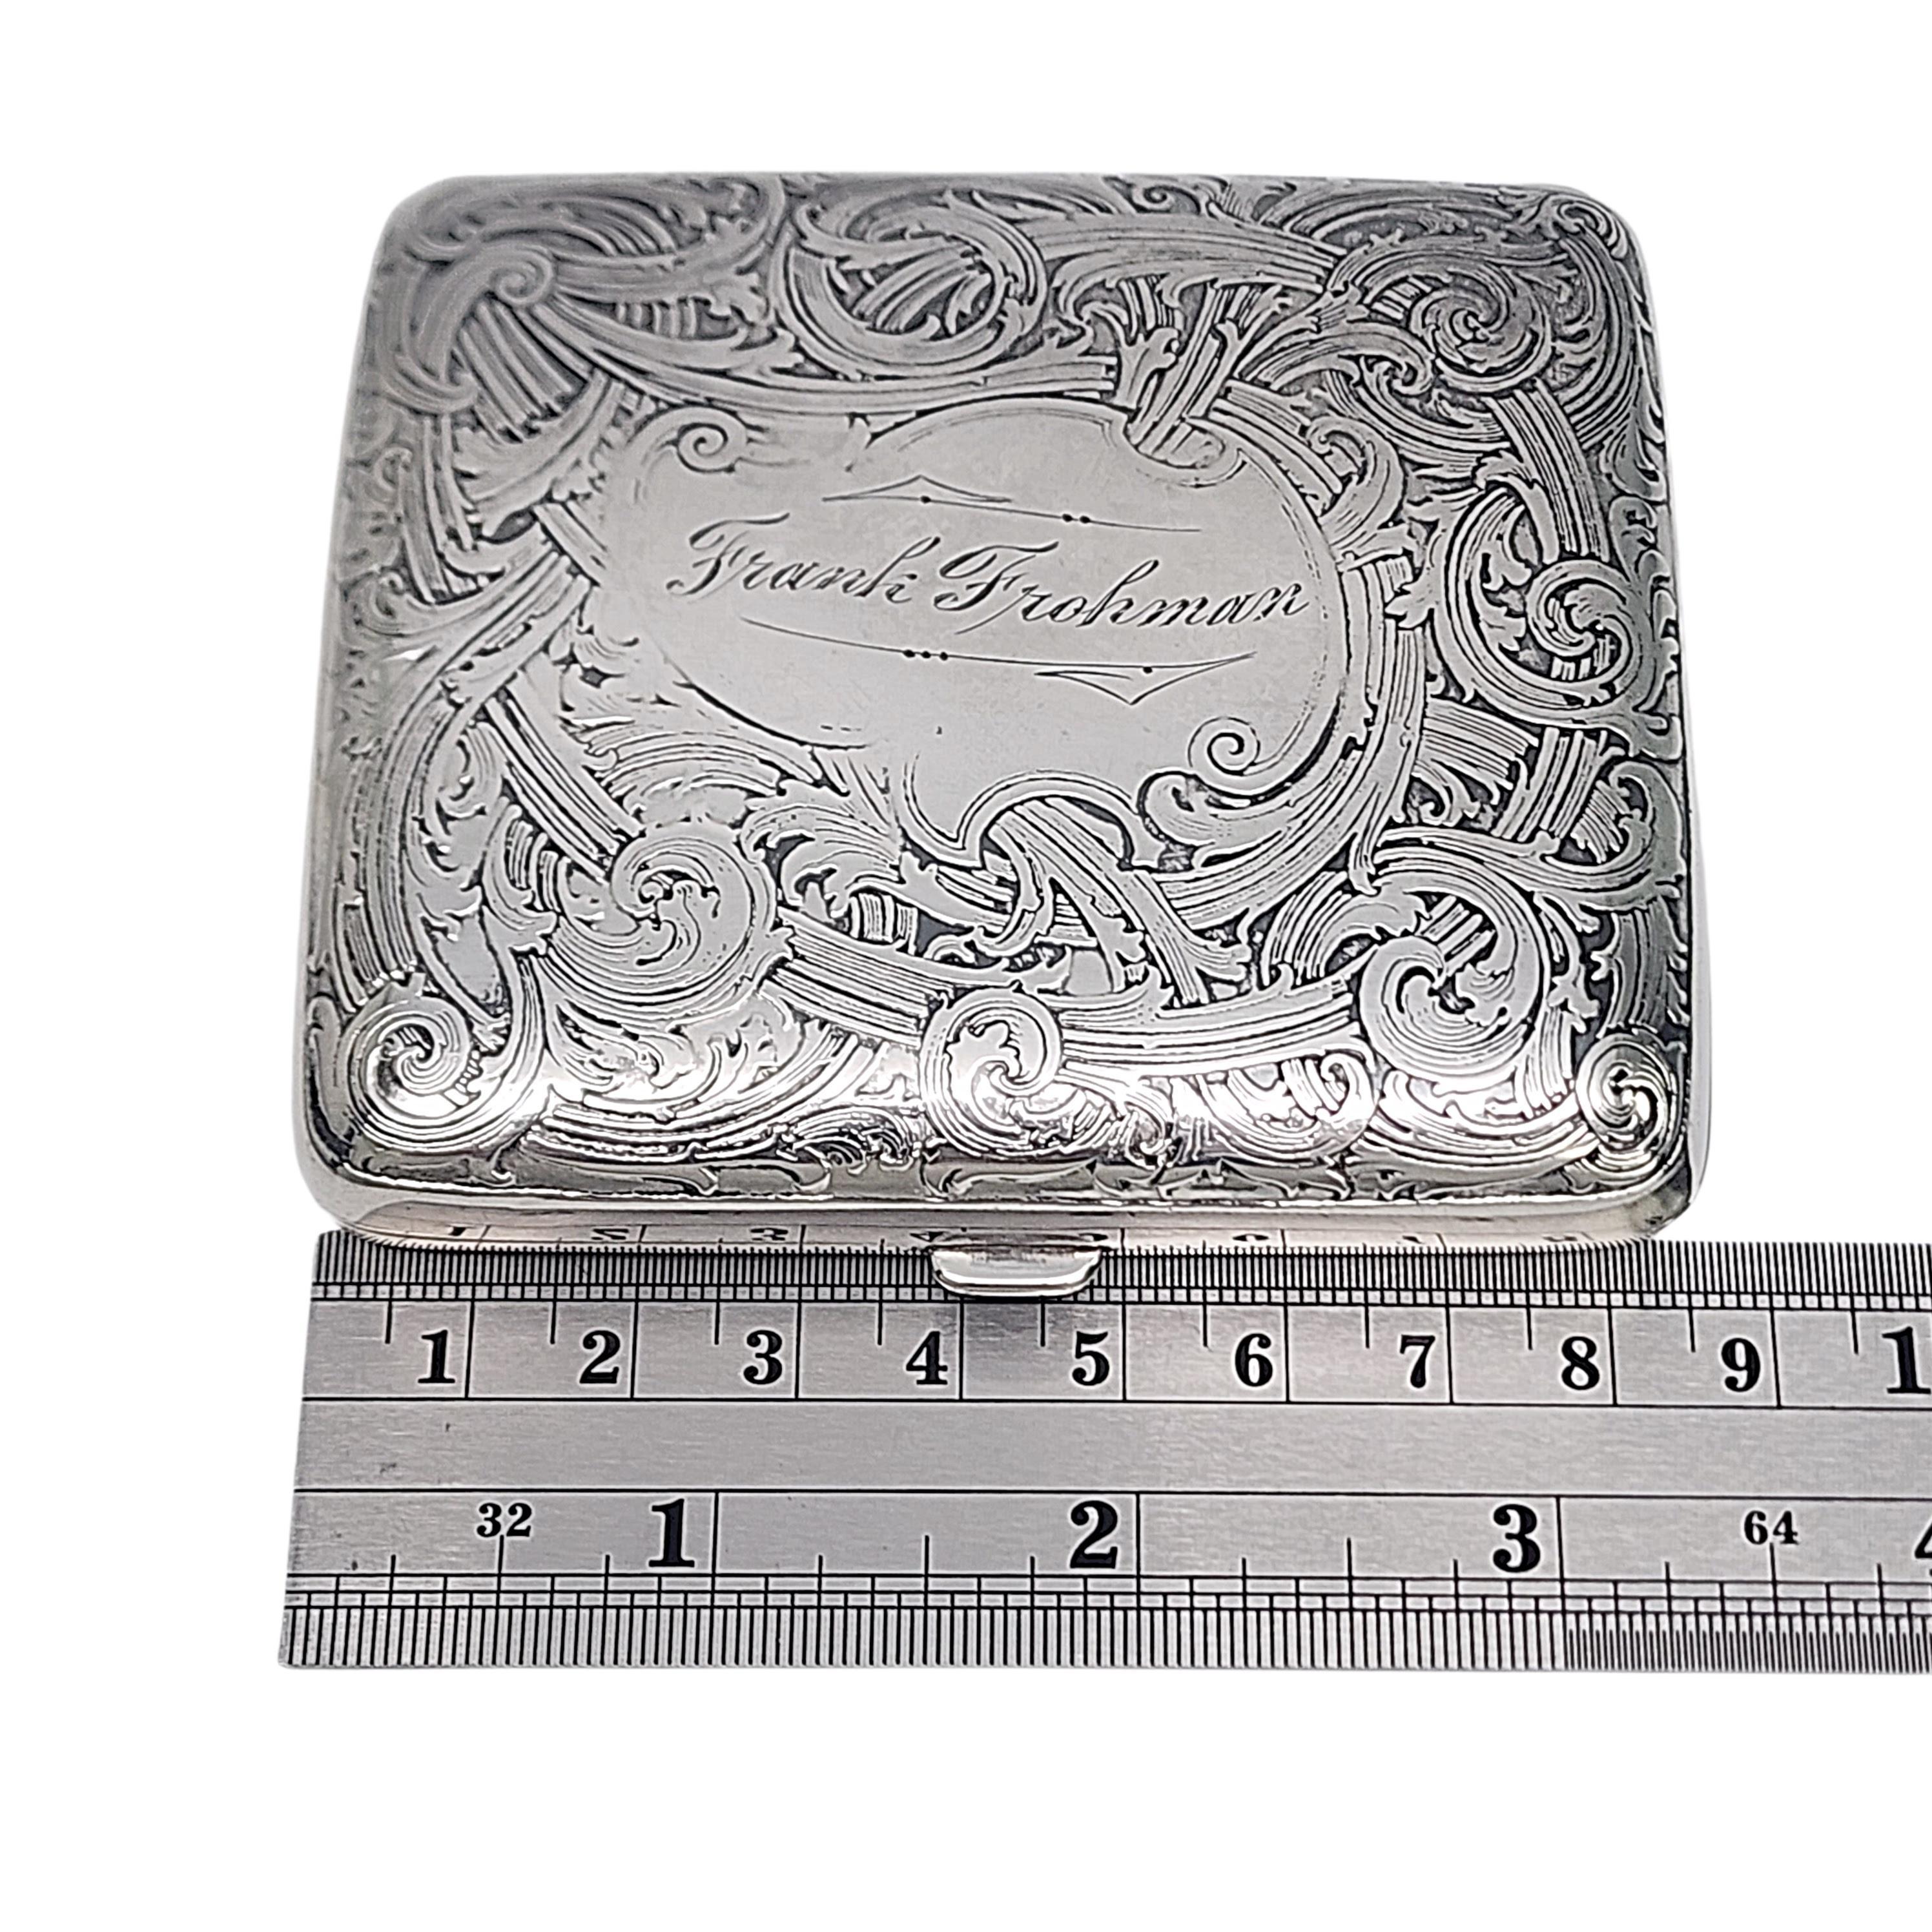 Antique William B Kerr Sterling Silver Cigarette Case w/Engraving #16526 For Sale 5